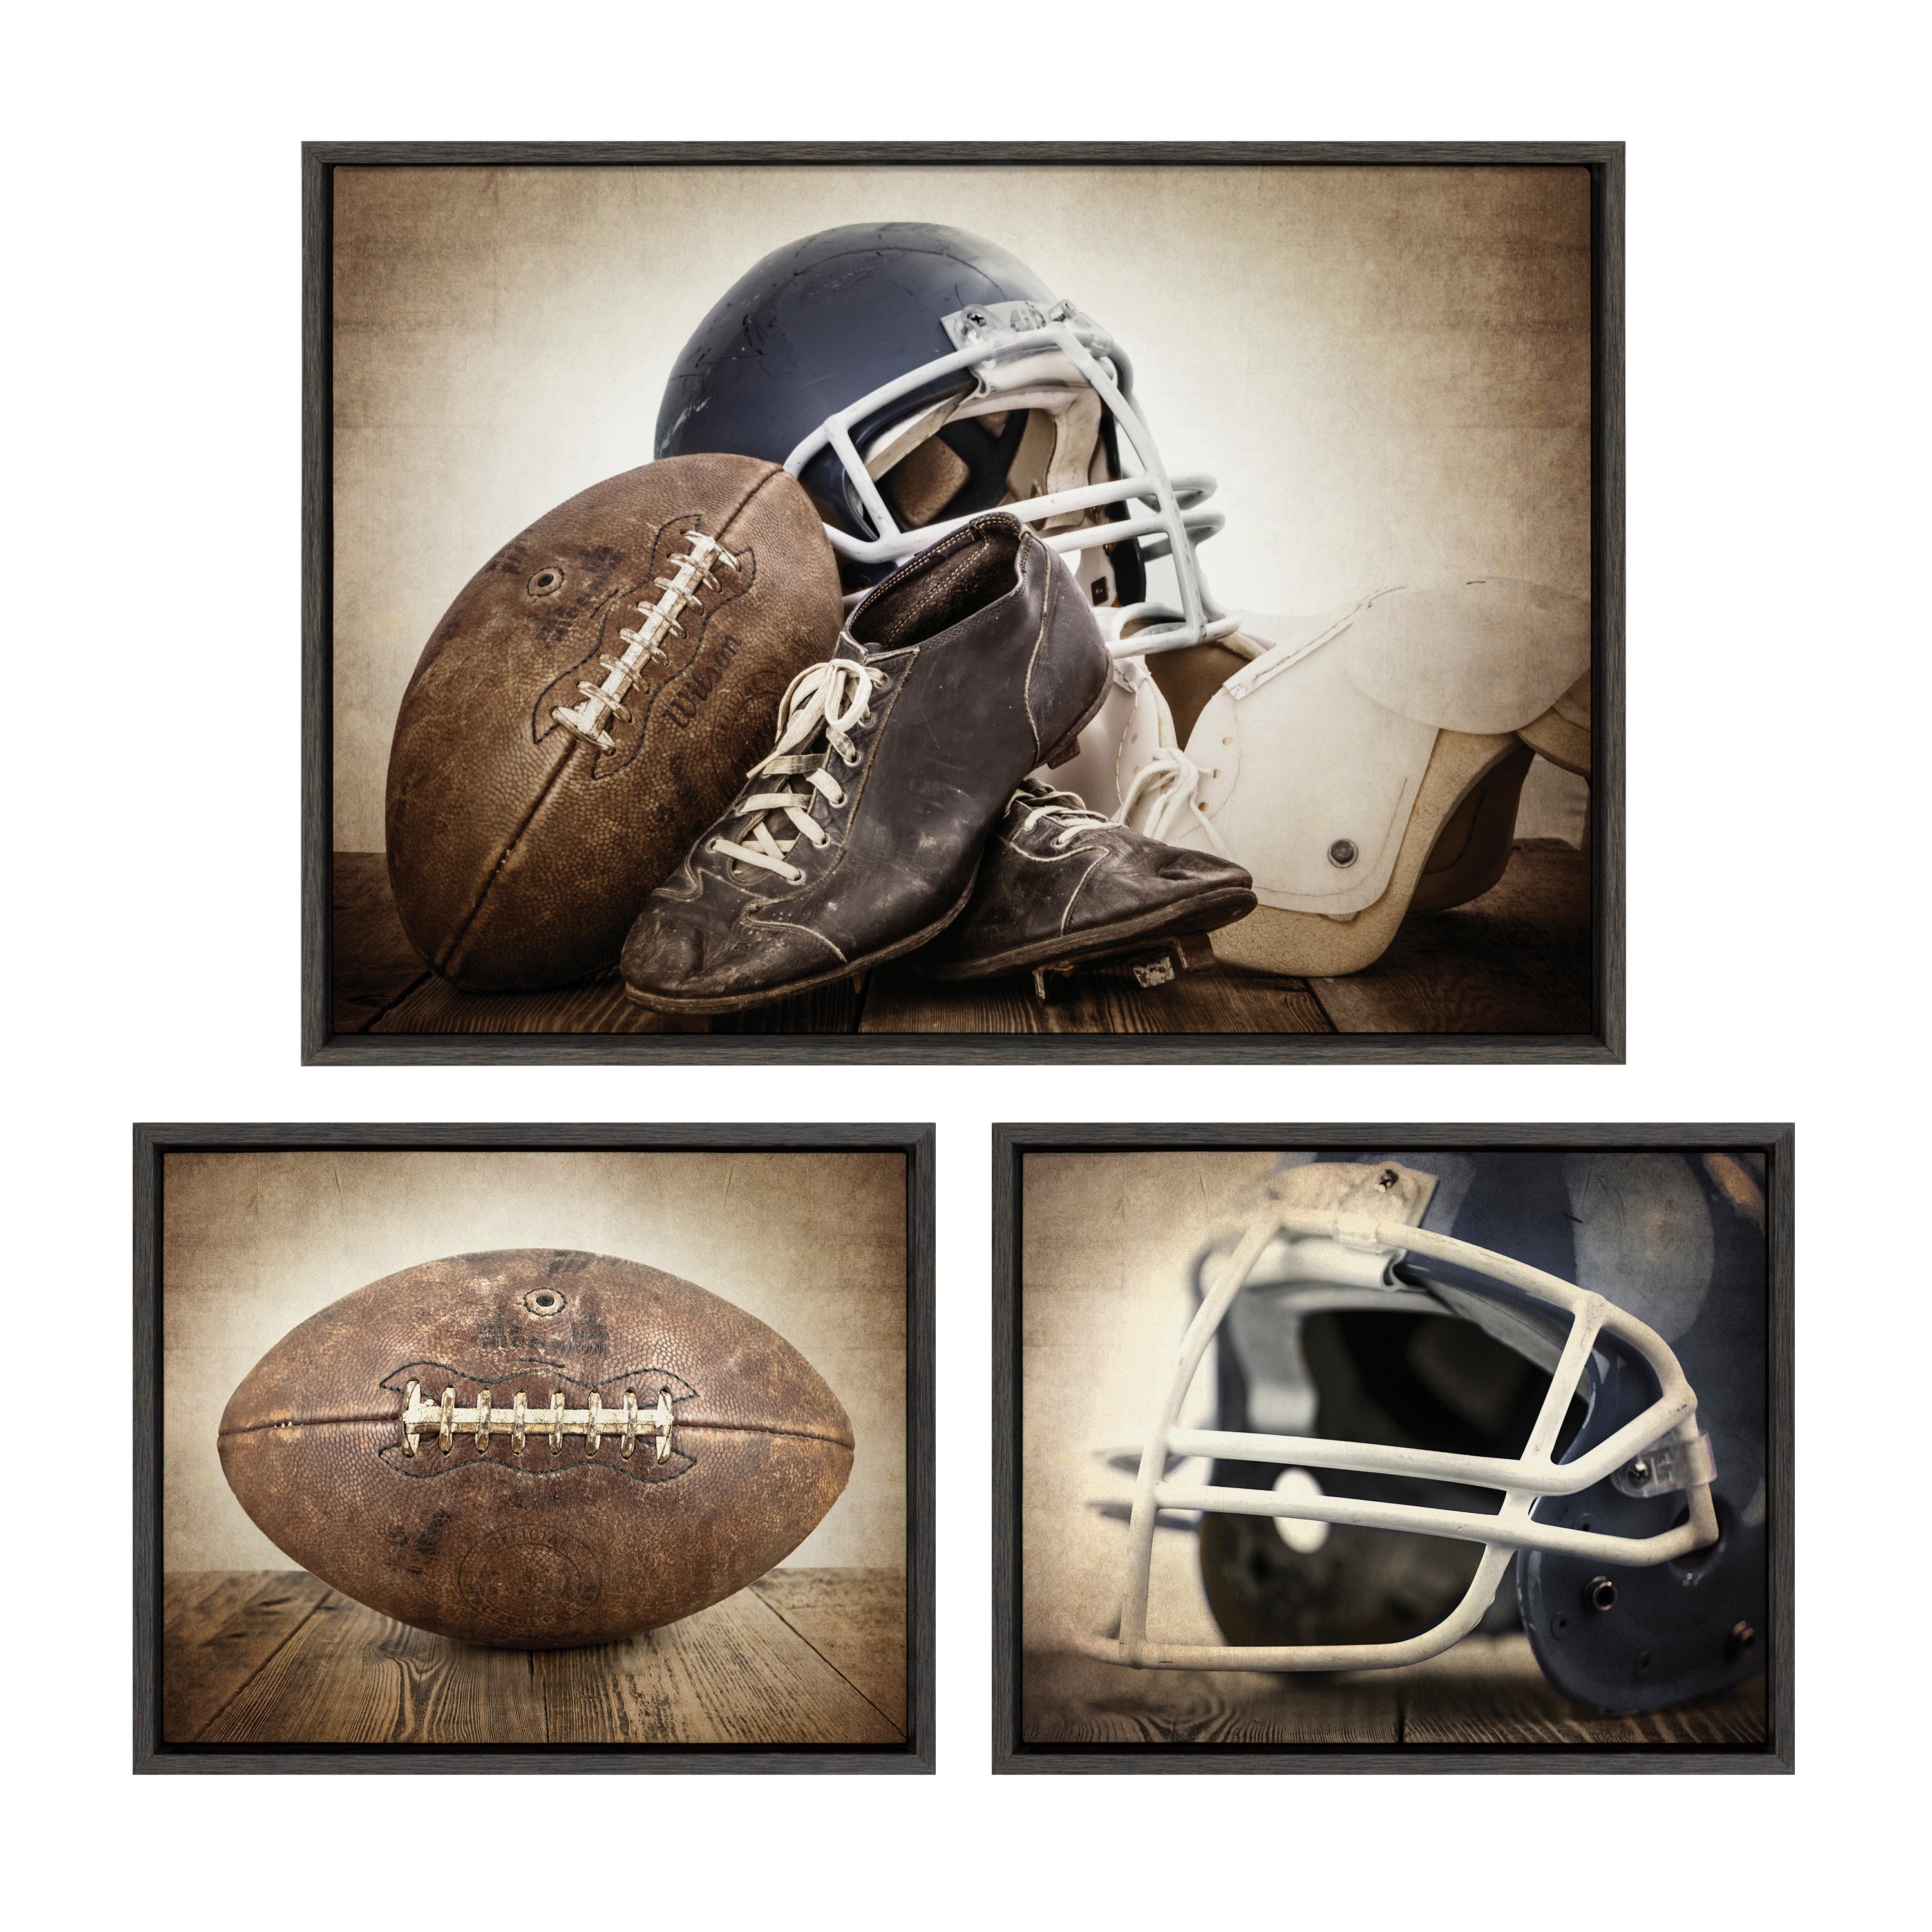 Sylvie Vintage Football, Vintage Football Gear and Vintage Football Helmet Framed Canvas Art Set by Saint and Sailor Studios